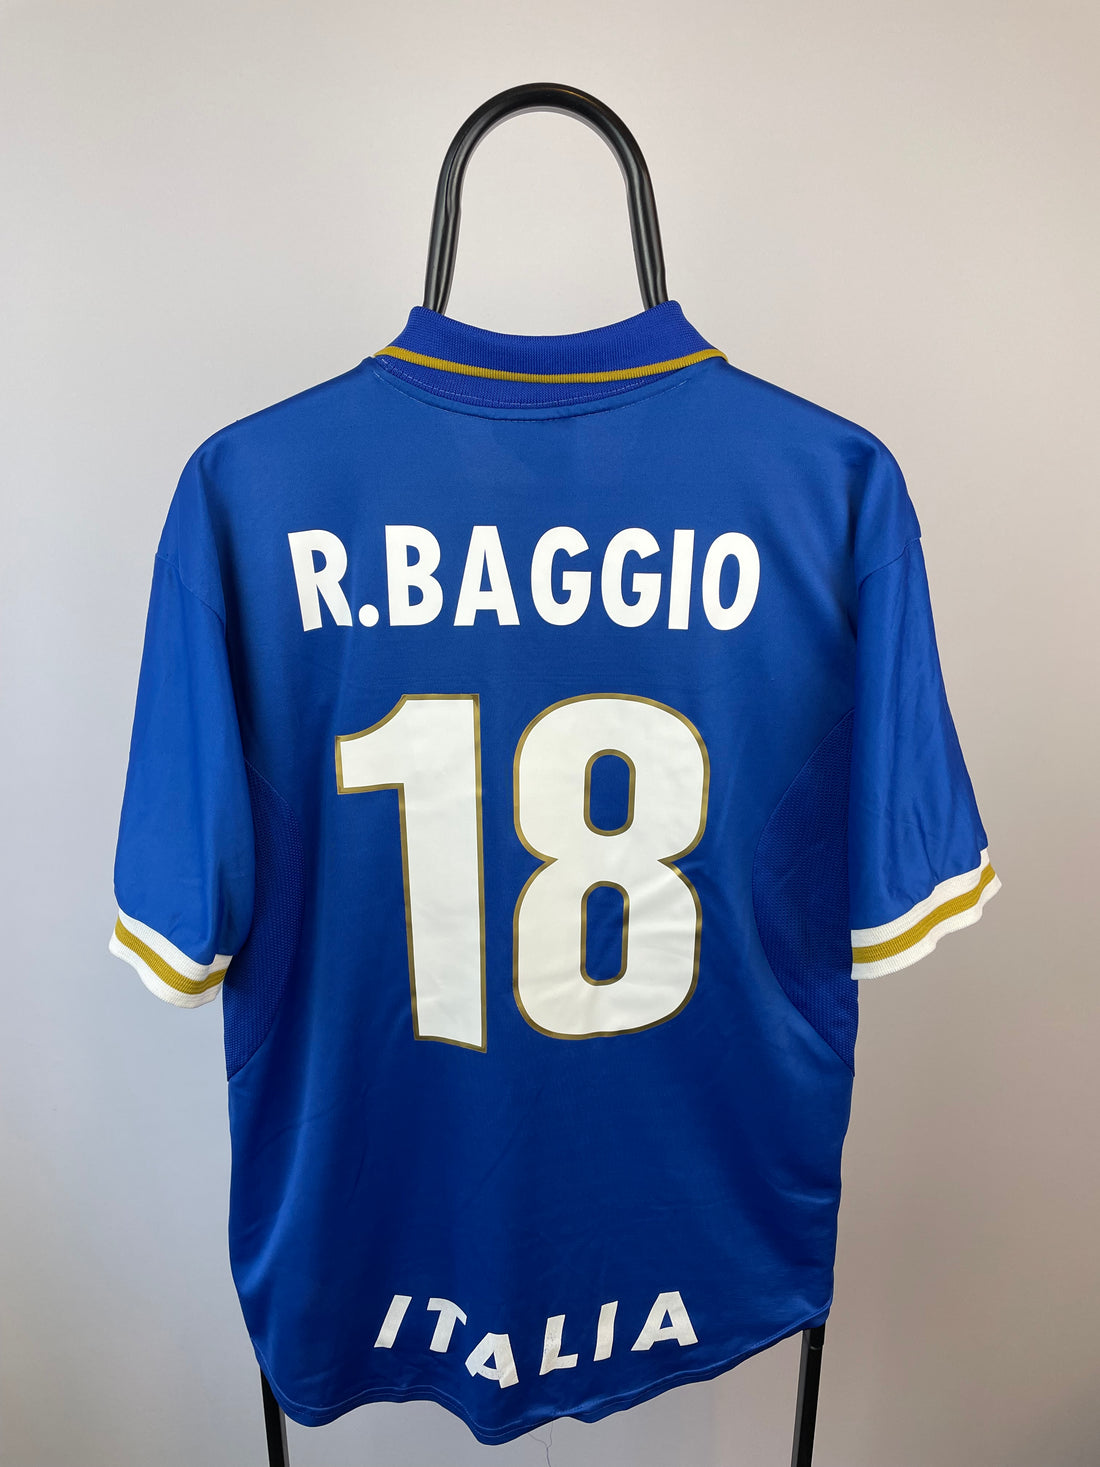 Roberto Baggio Italien 96/97 hjemmebanetrøje - XL